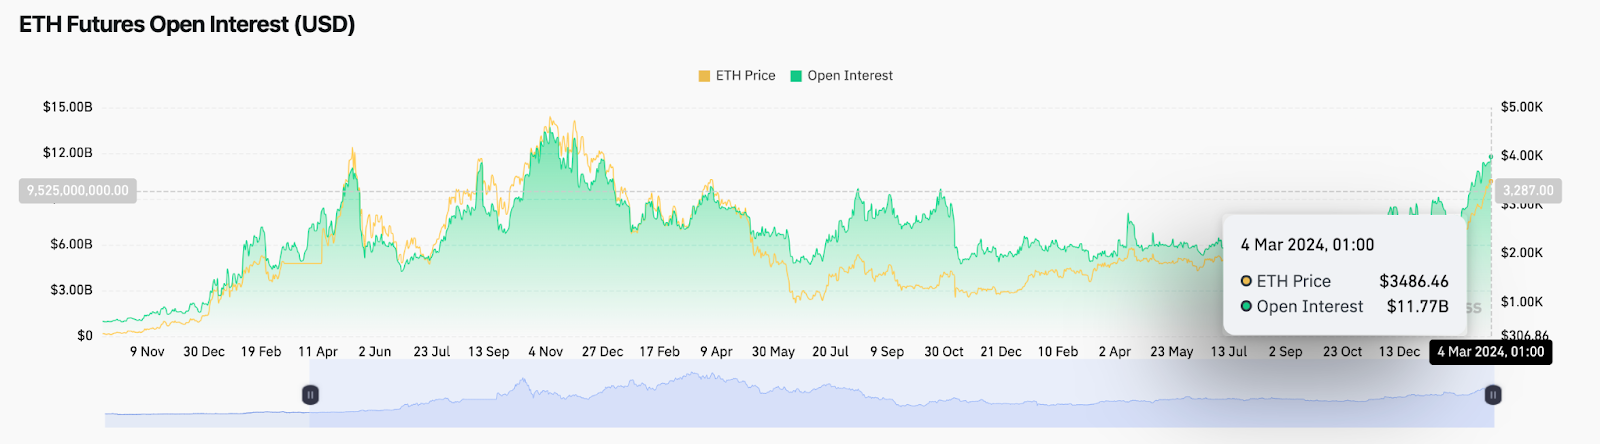 Ethereum (ETH) Open Interest vs. Price